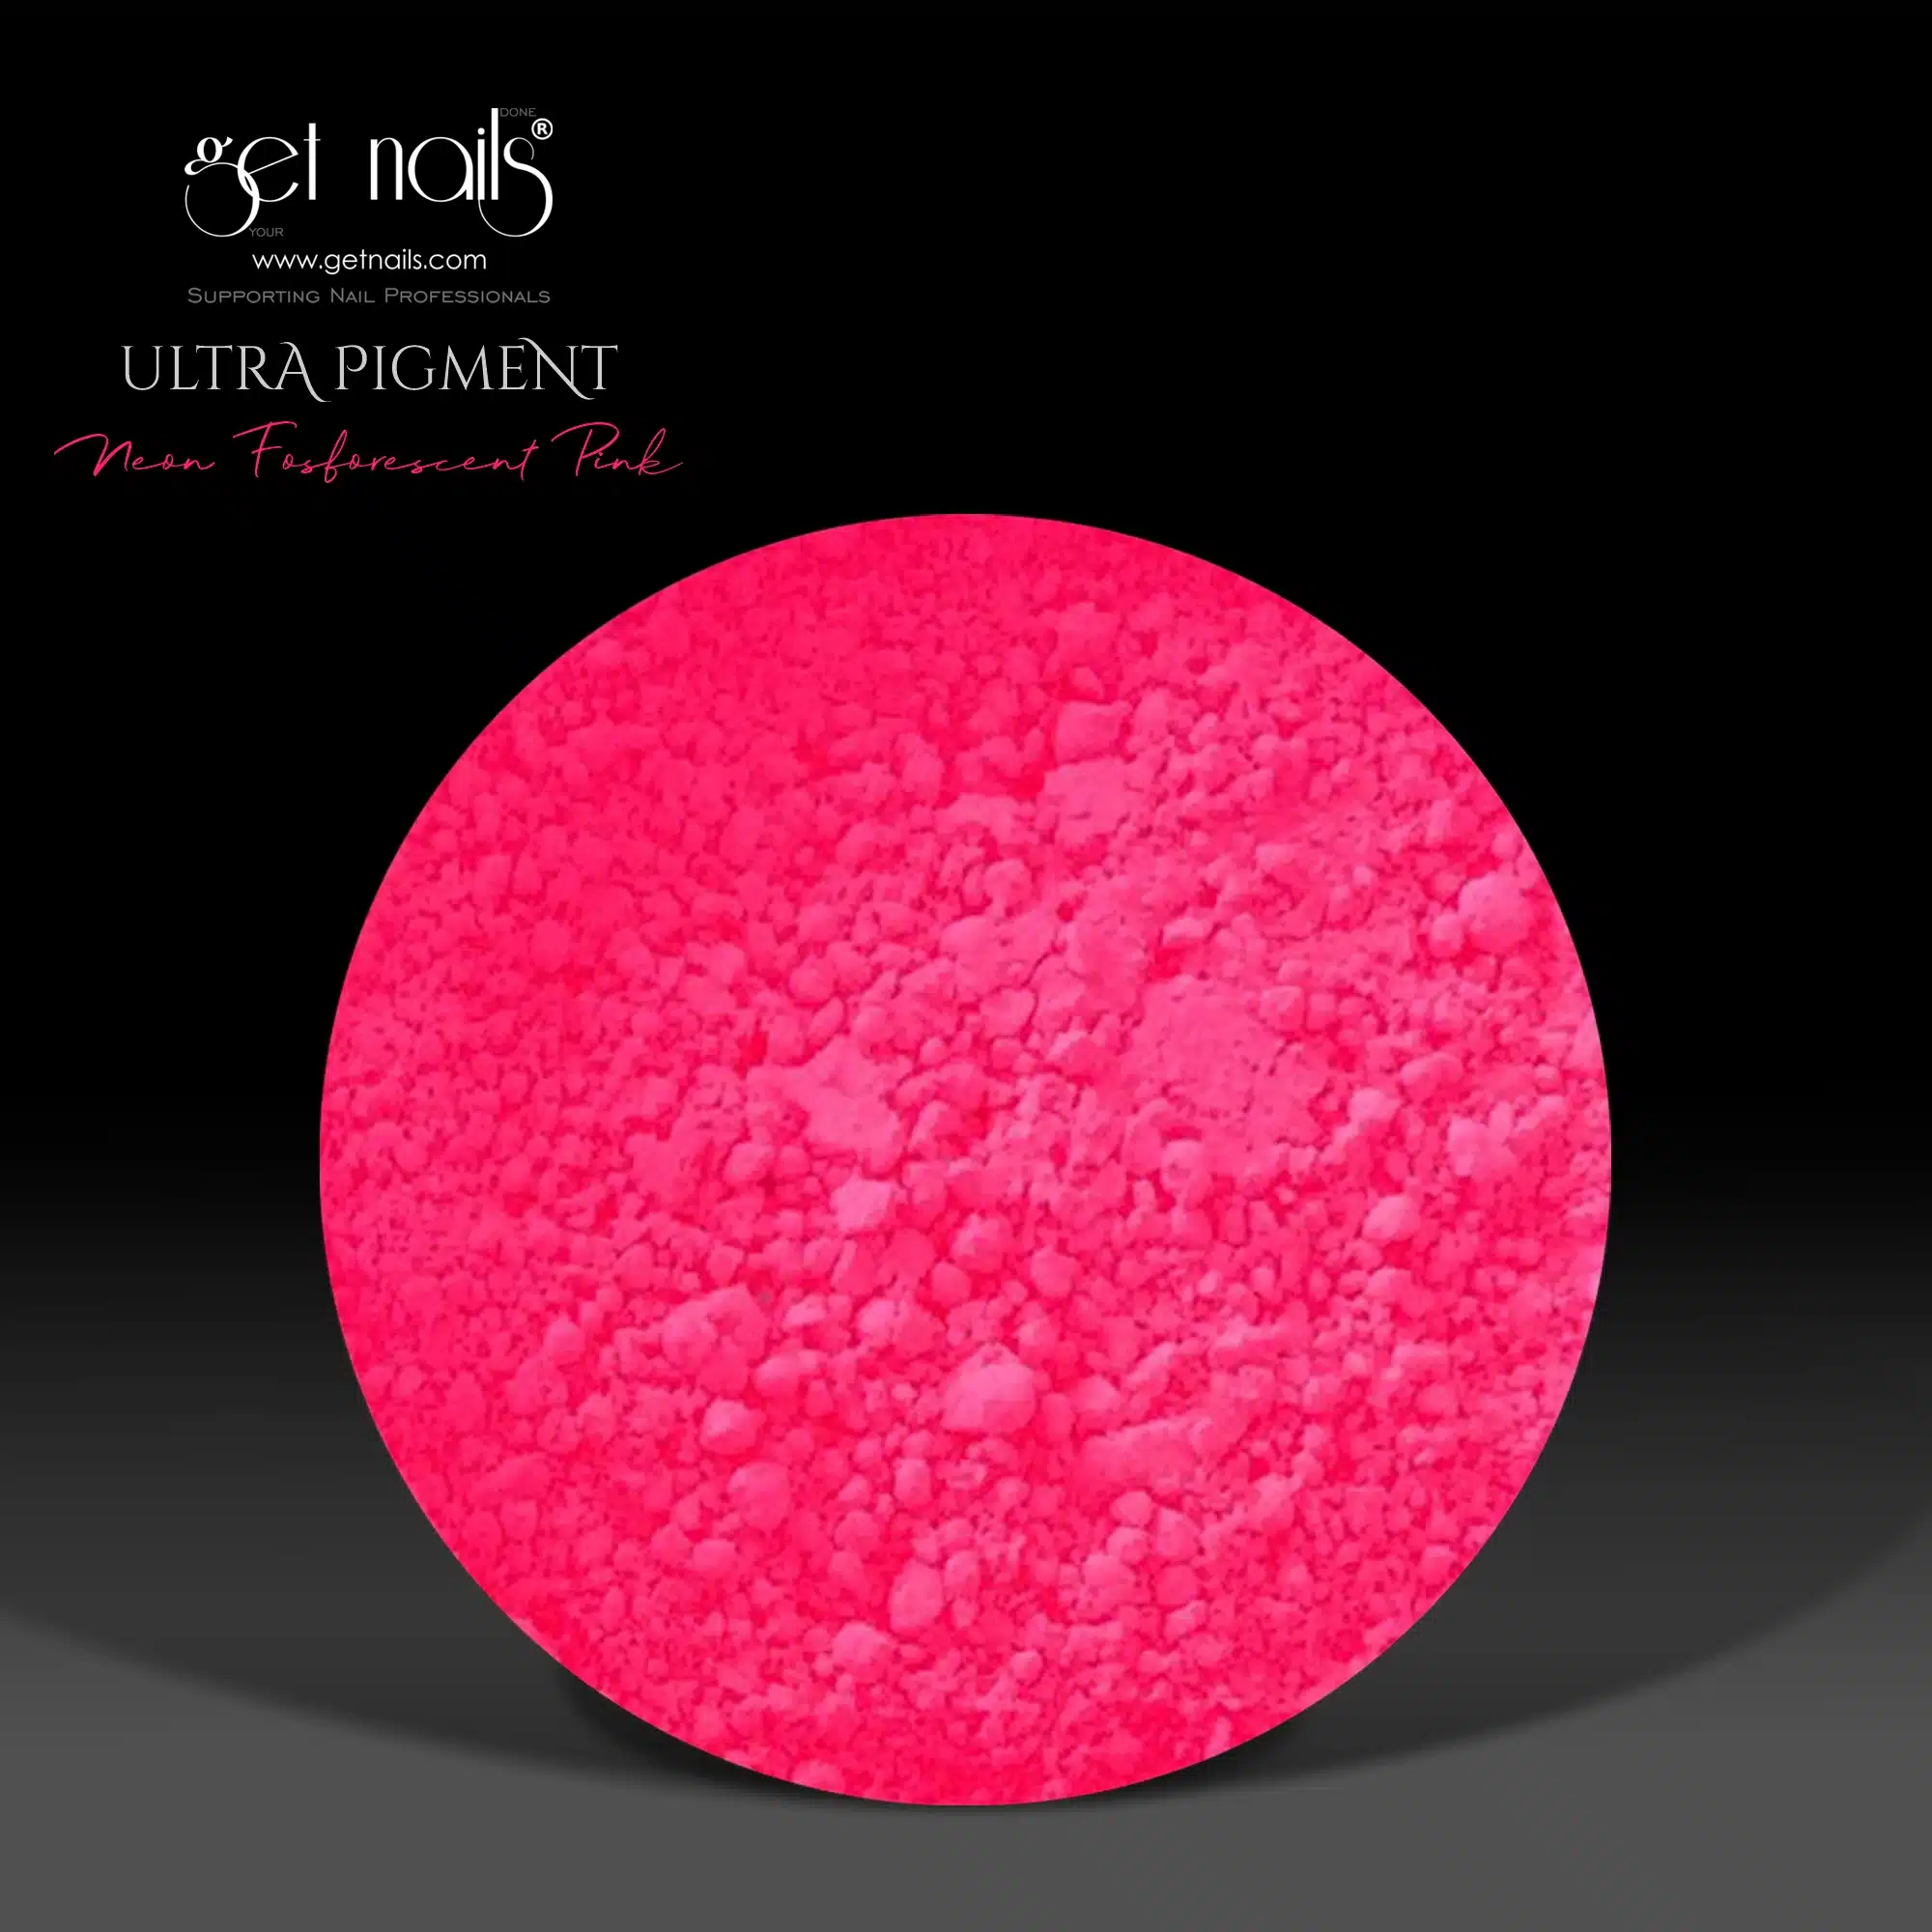 Get Nails Austria - Ultra Pigment Neon Fosforescent Pink 5g